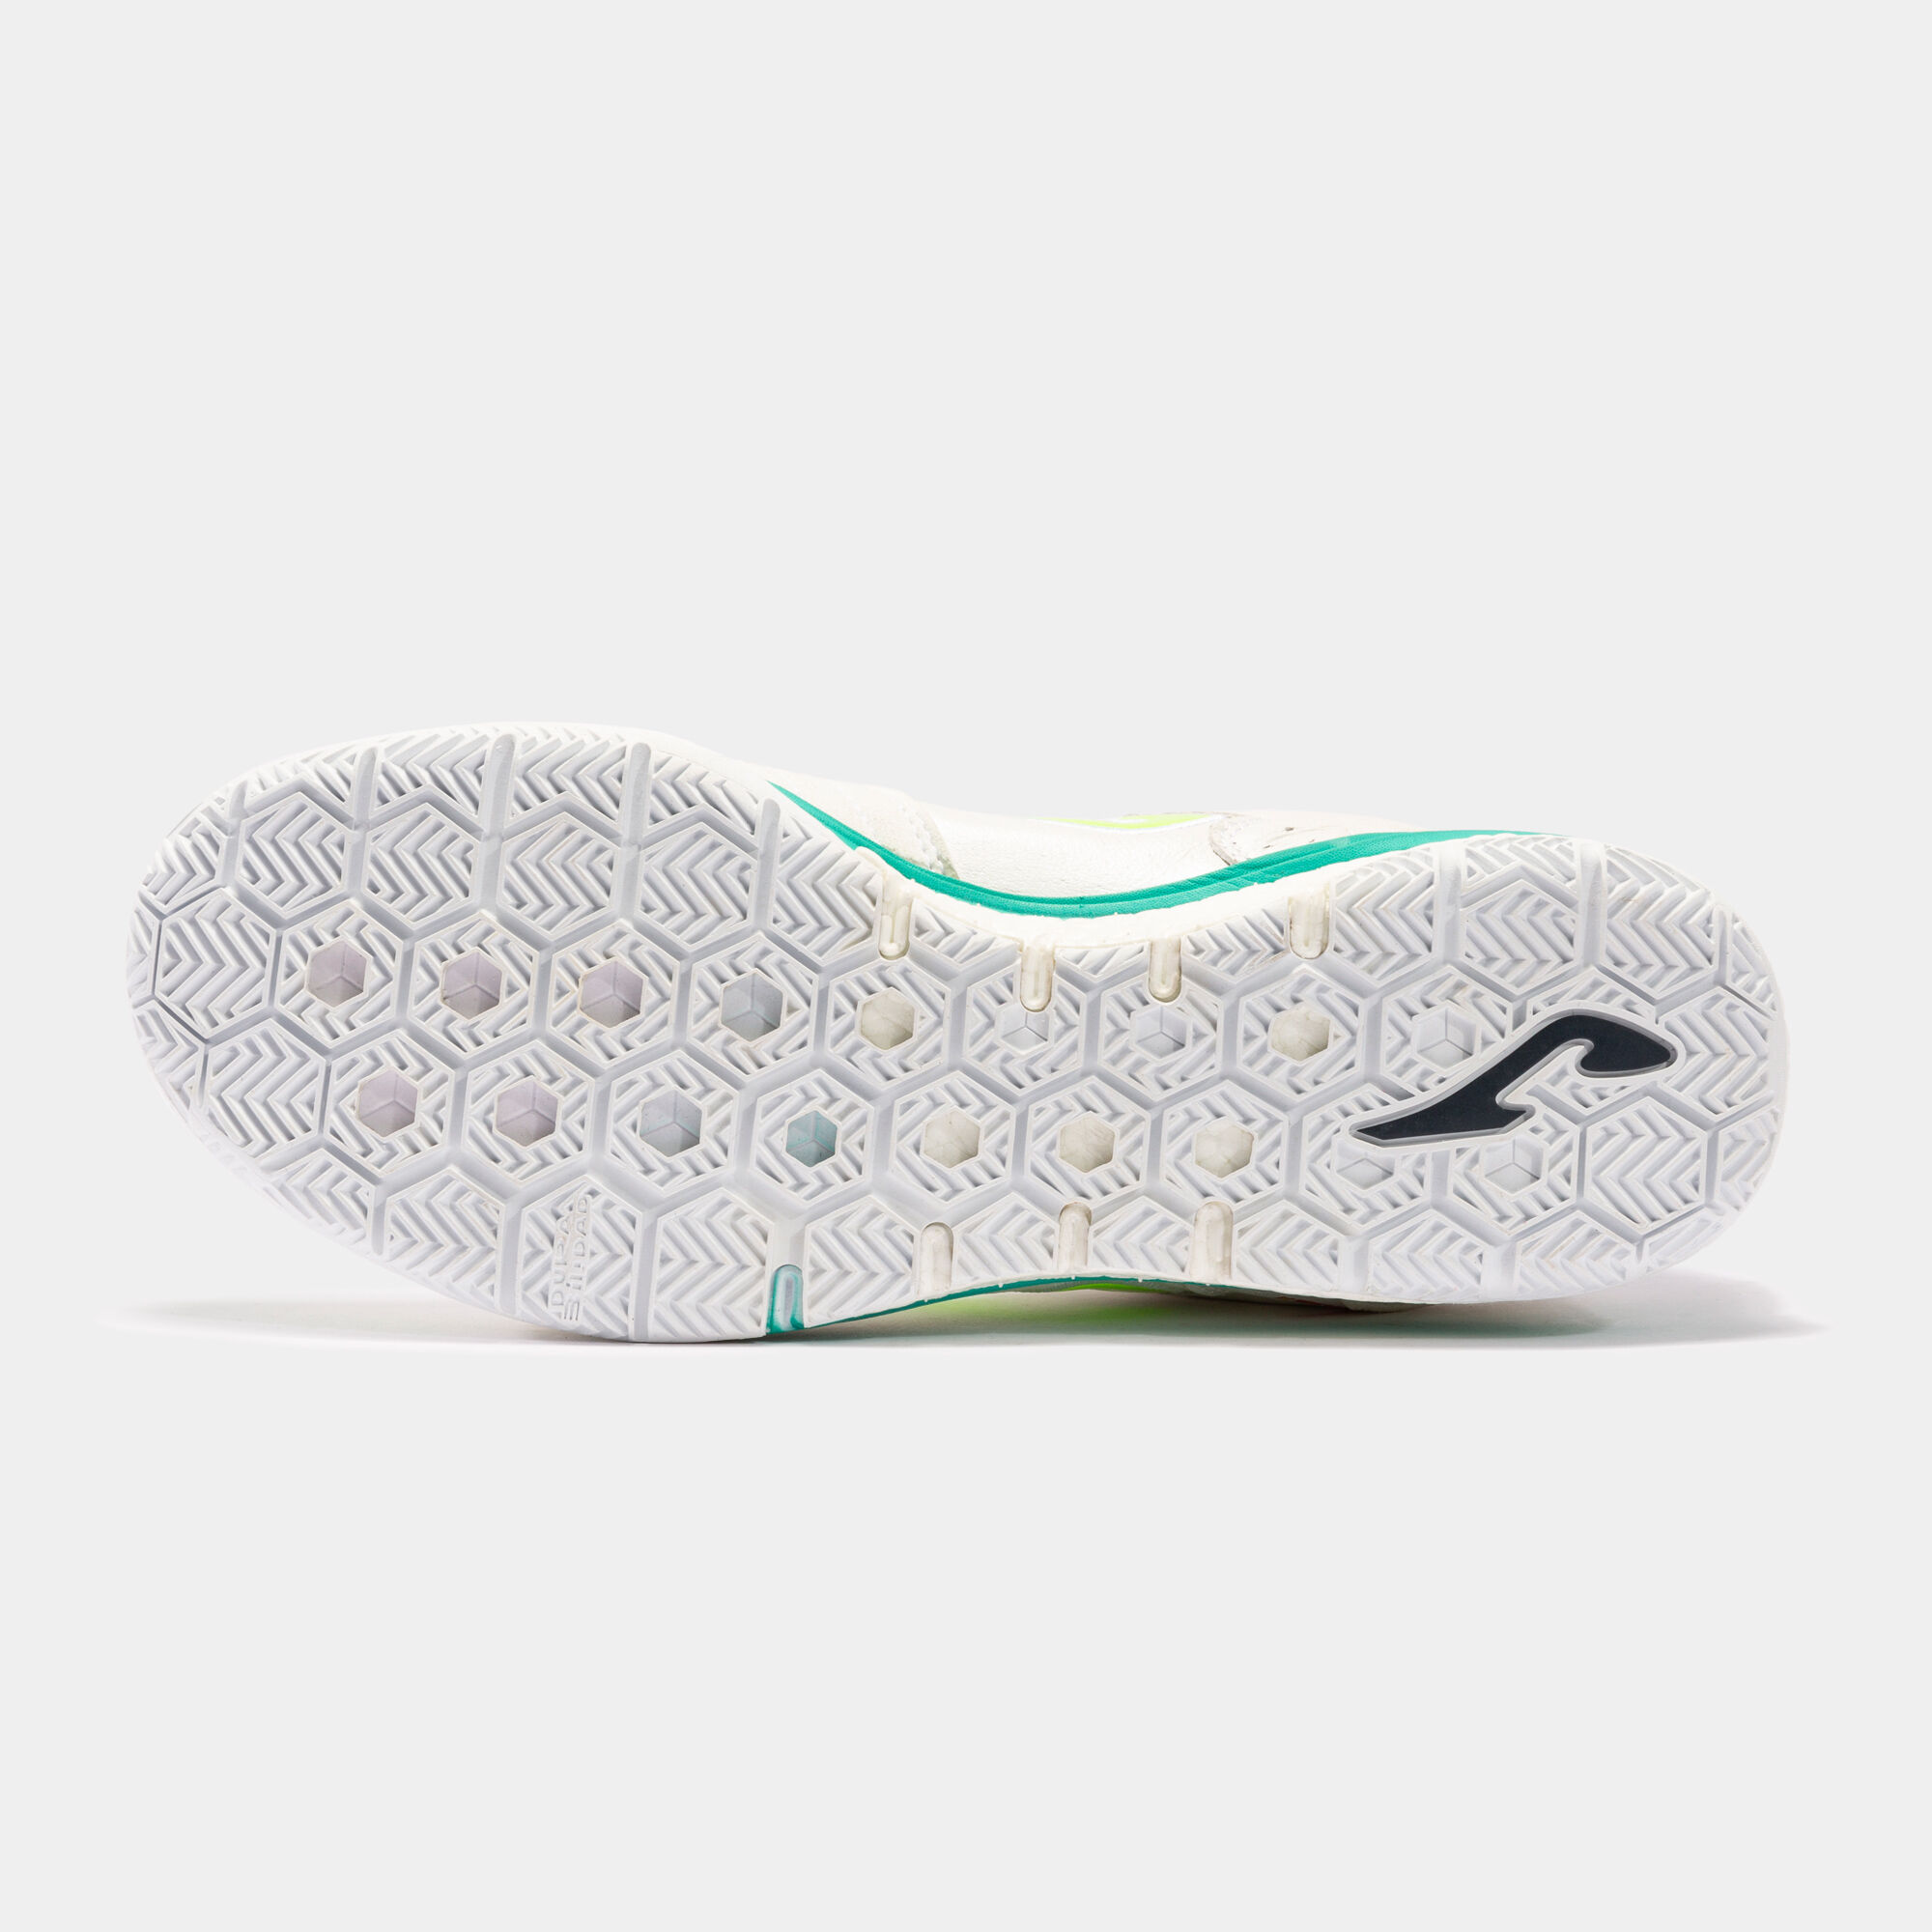 Futsal shoes Top Flex Rebound 22 indoor white turquoise